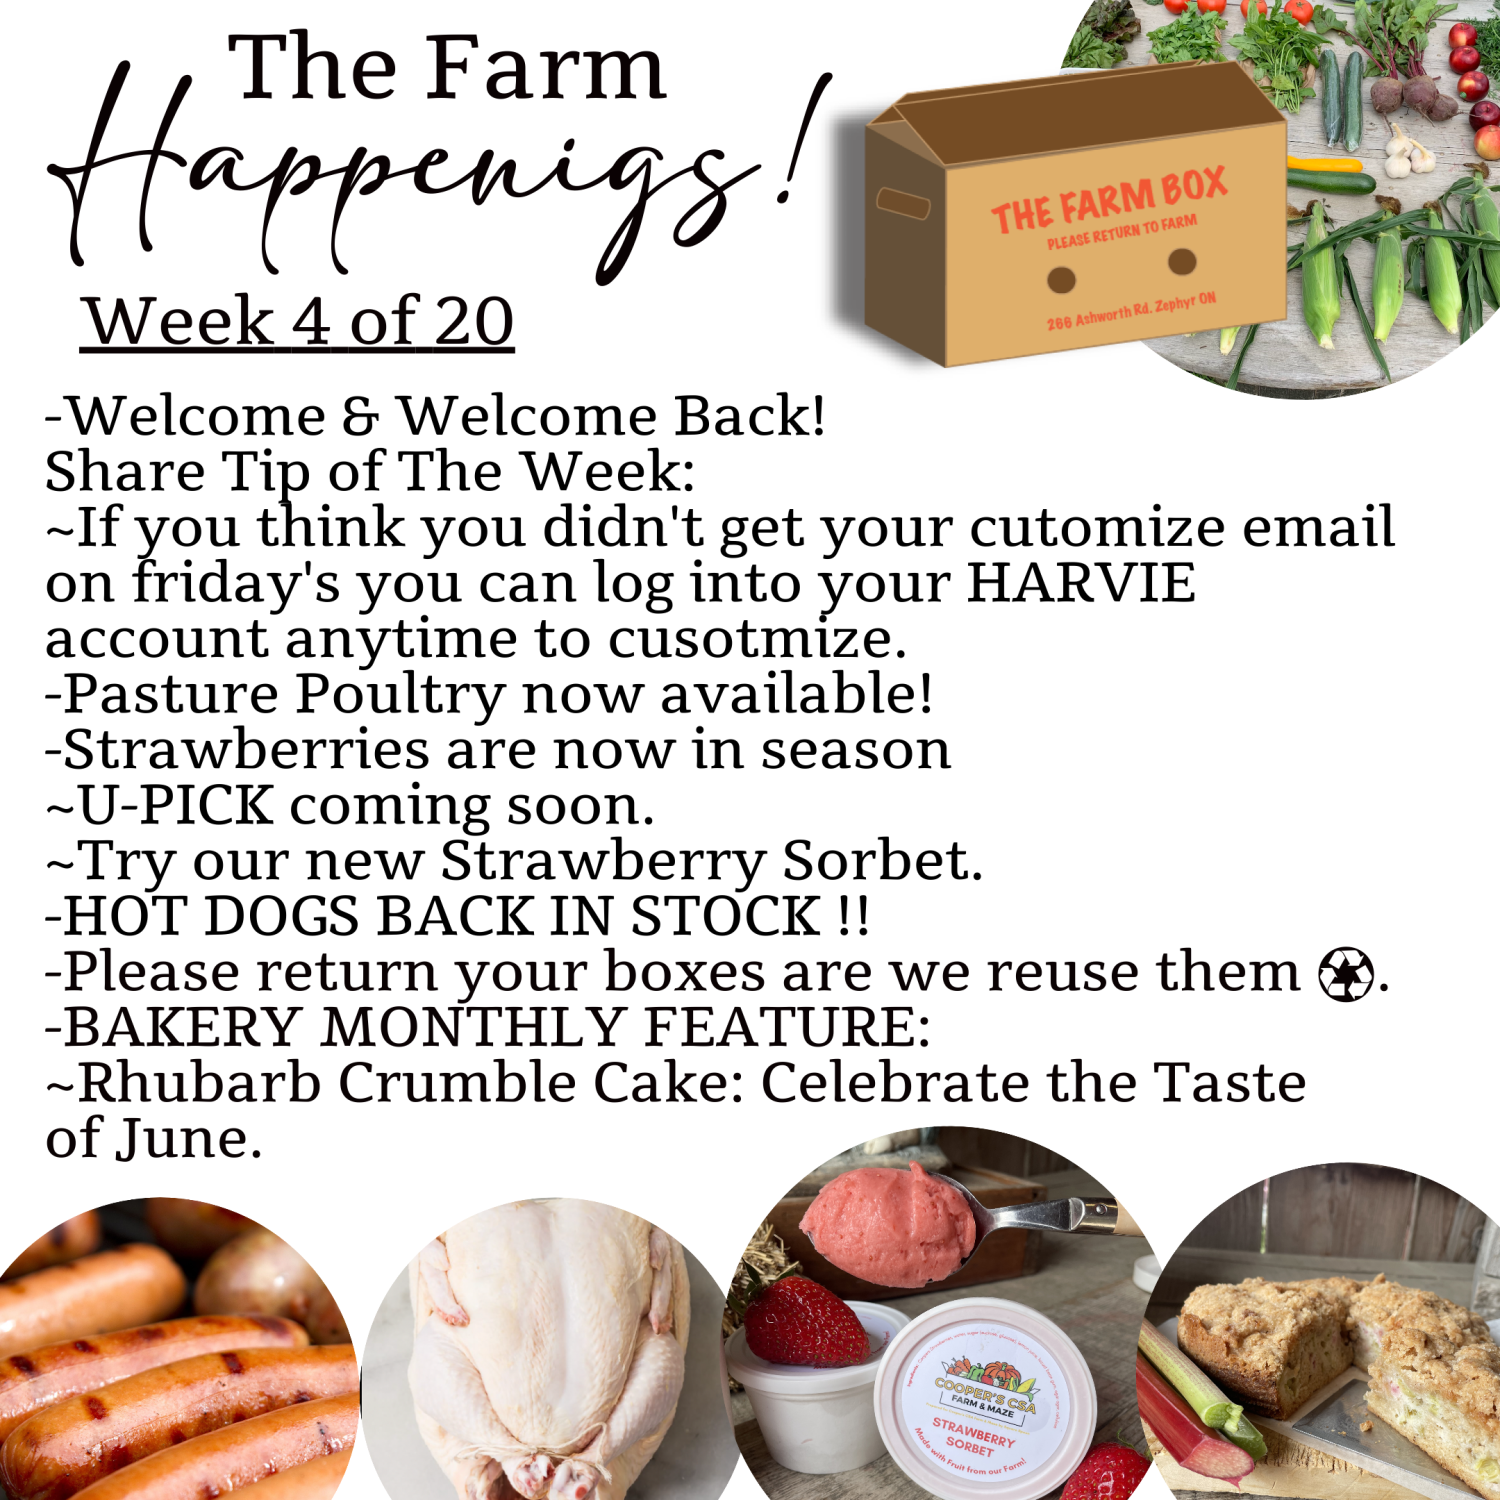 Previous Happening: "The Farm Box"-Coopers CSA Farm Farm Happenings Week 4 of 20